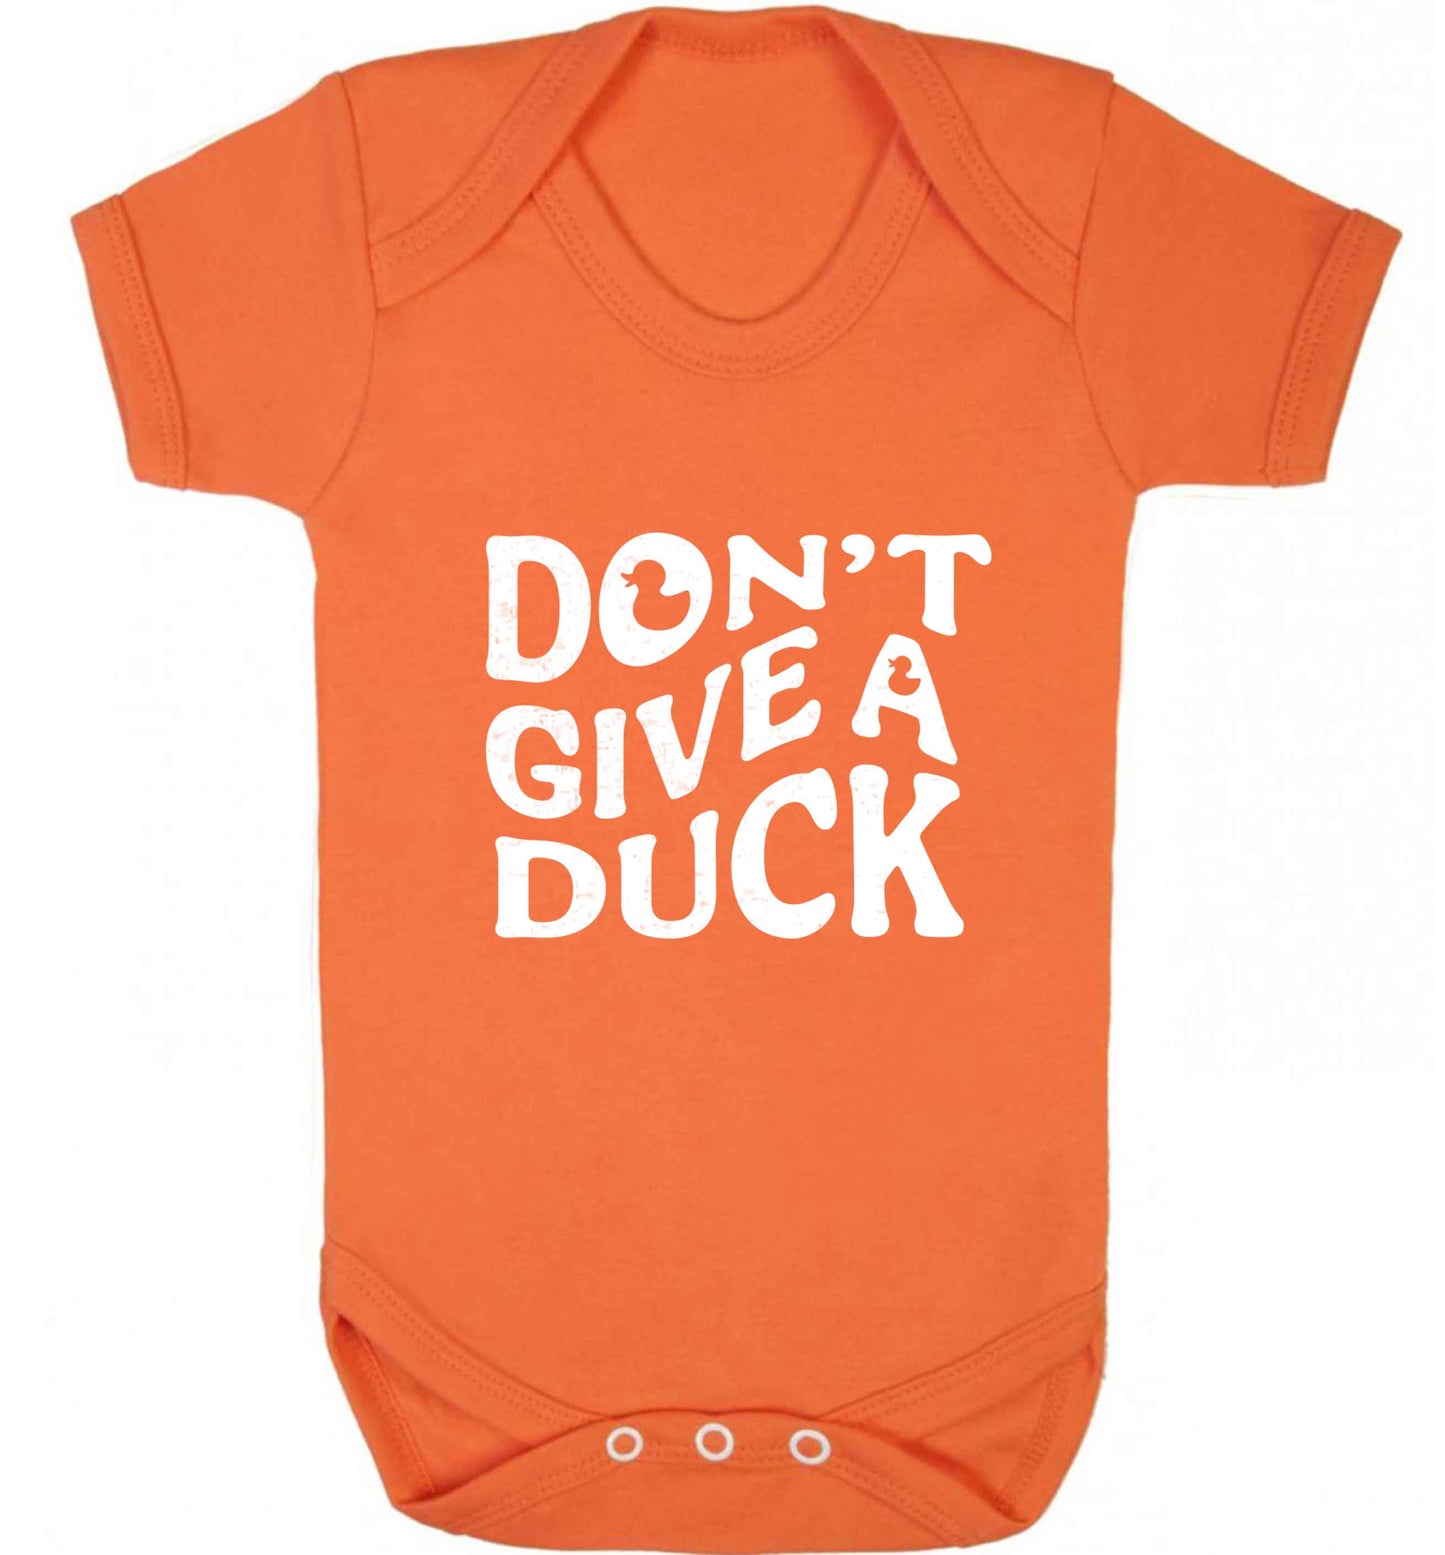 Don't give a duck baby vest orange 18-24 months